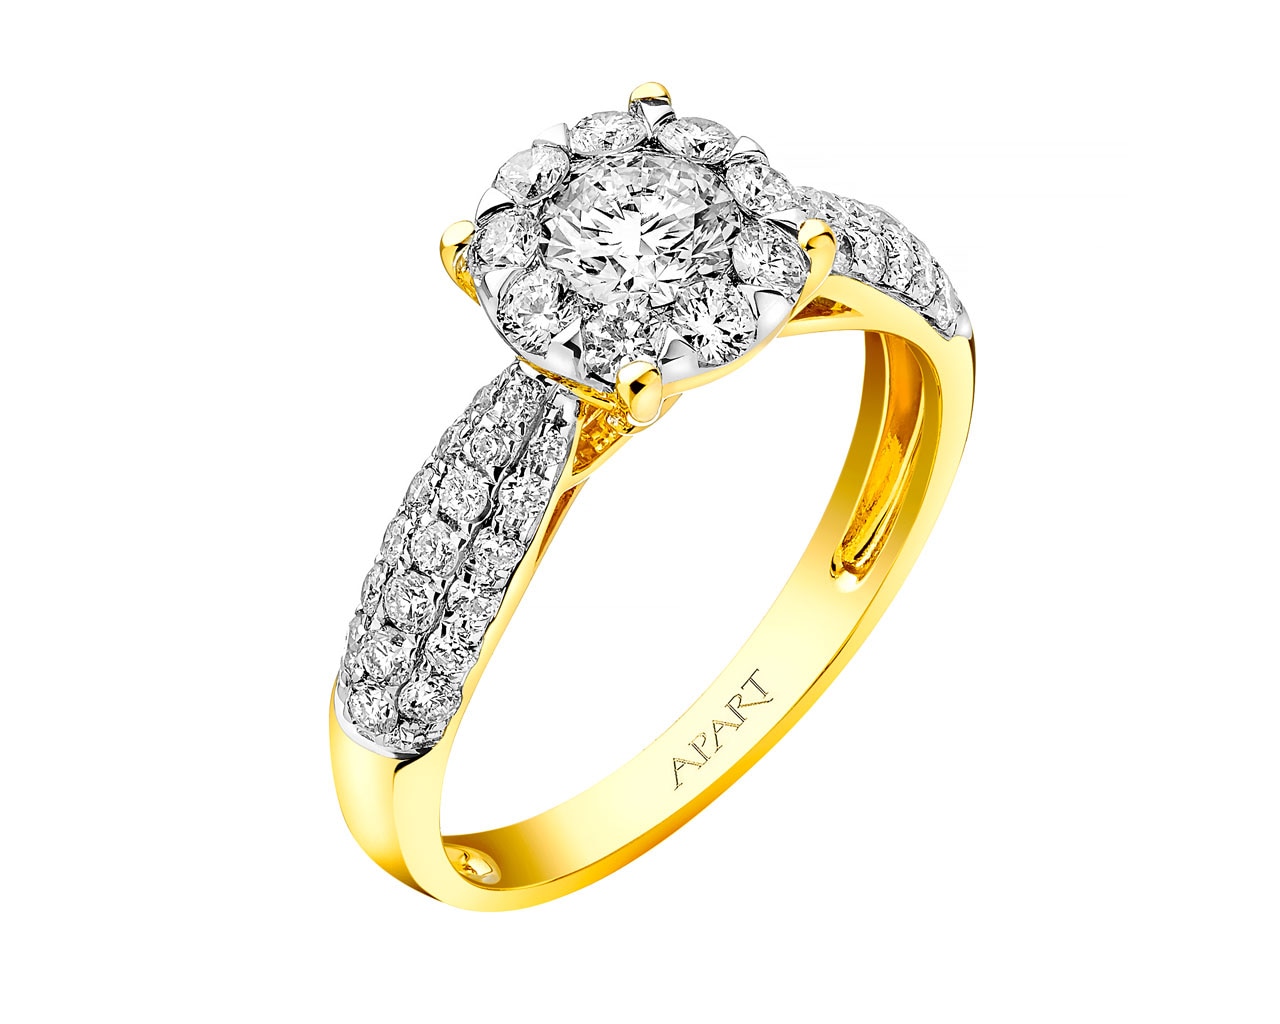 Prsten ze žlutého zlata s brilianty 1,02 ct - ryzost 585